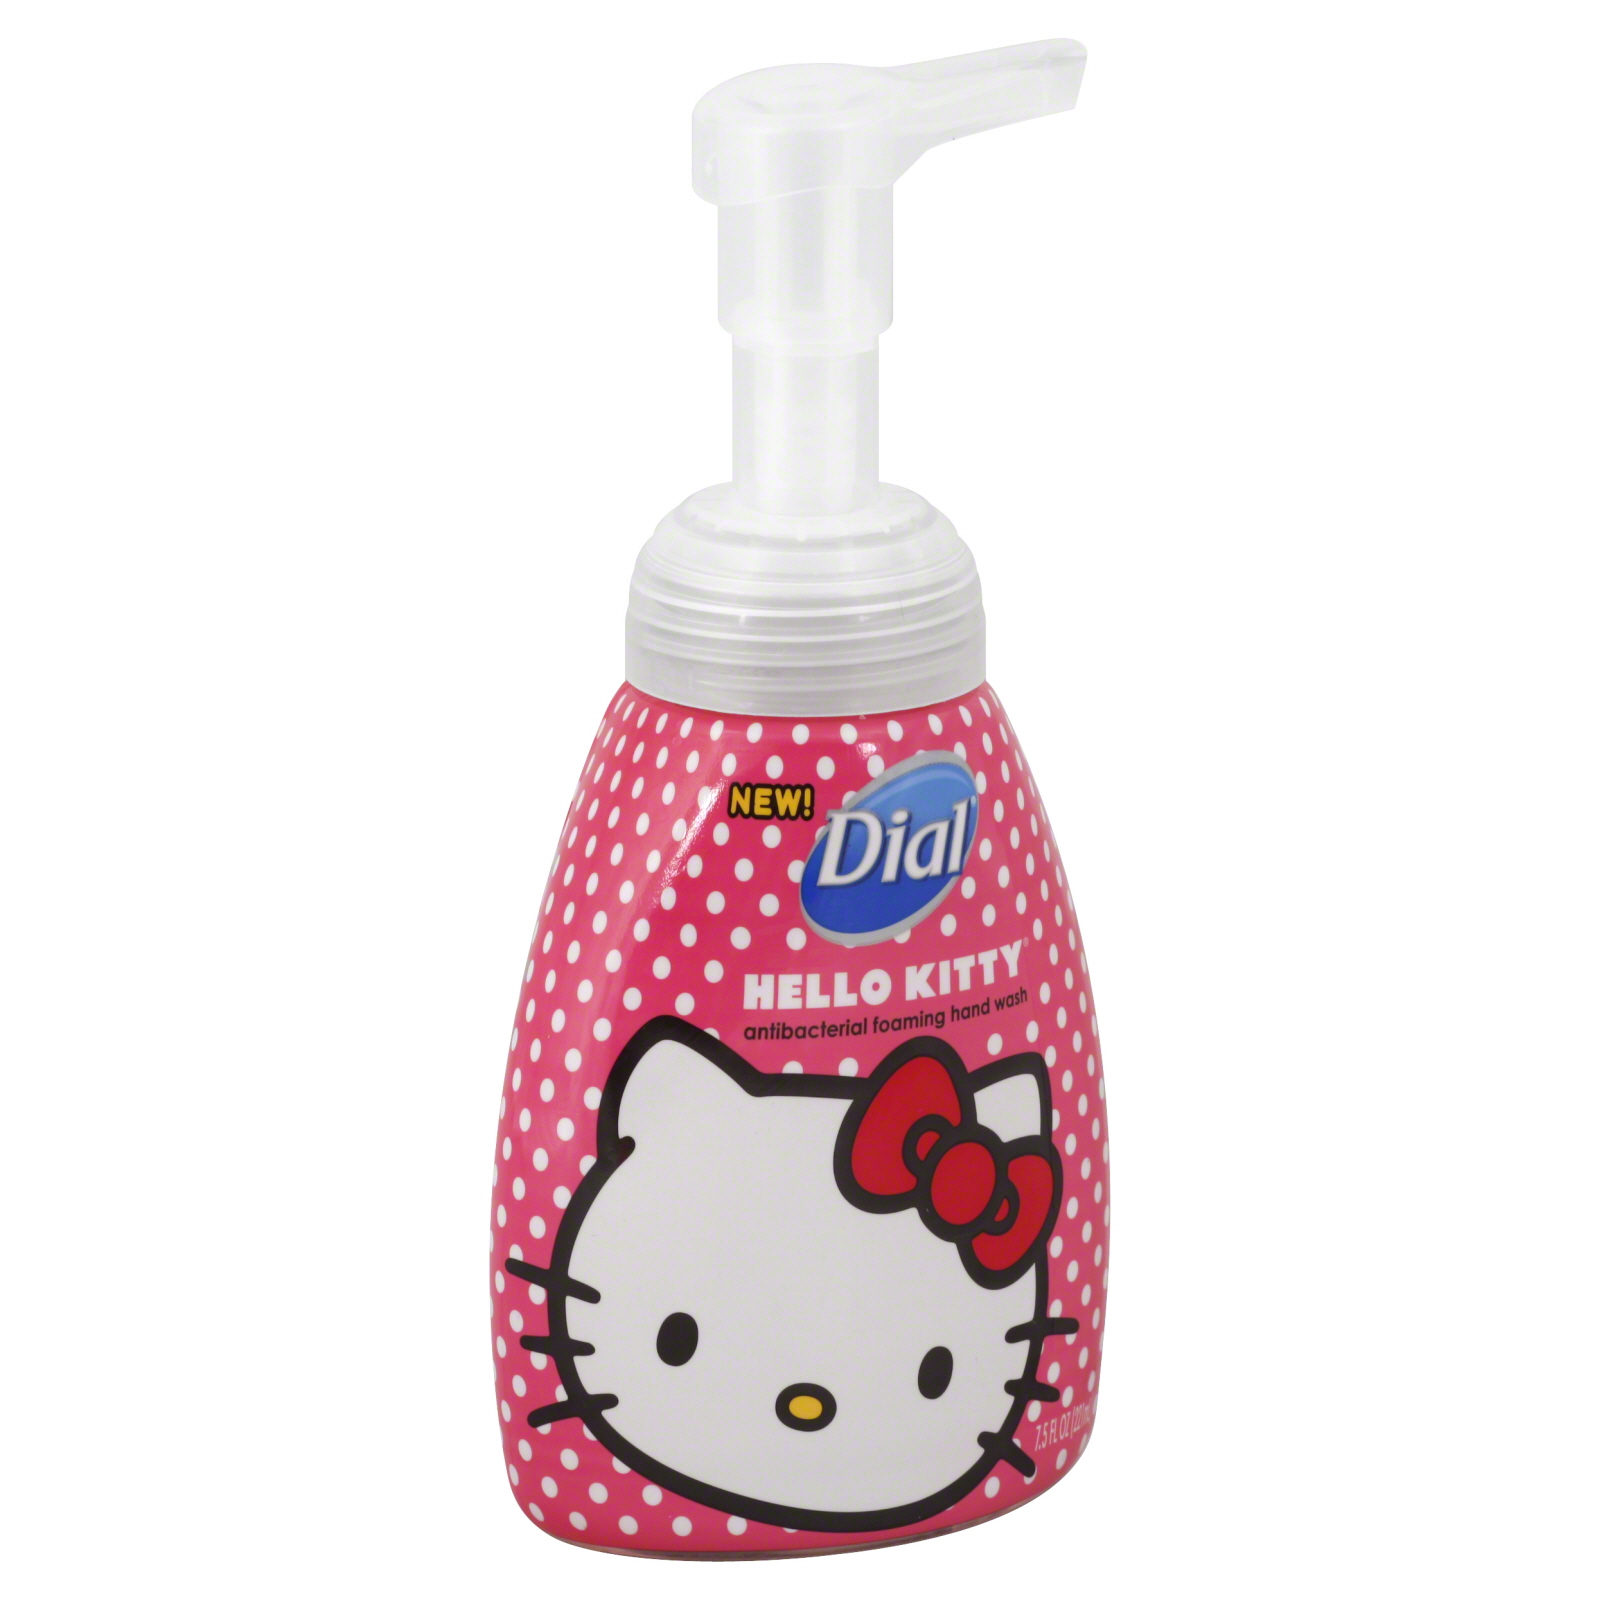 Dial Hello Kitty Foaming Hand Soap 7.5 fl oz